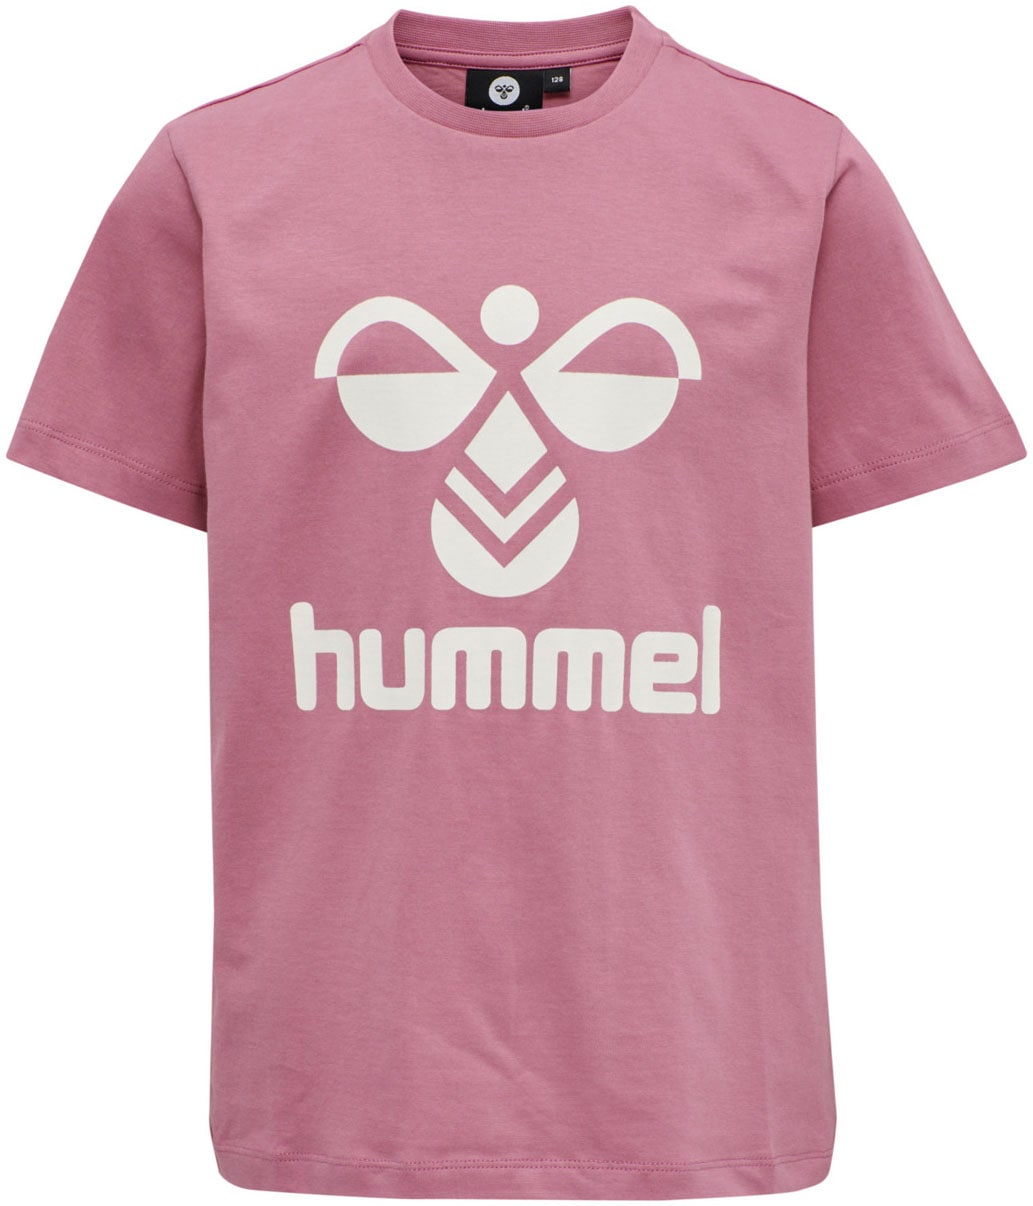 - tlg.) T-Shirt Sleeve (1 für Short Kinder«, bei T-SHIRT hummel »HMLTRES